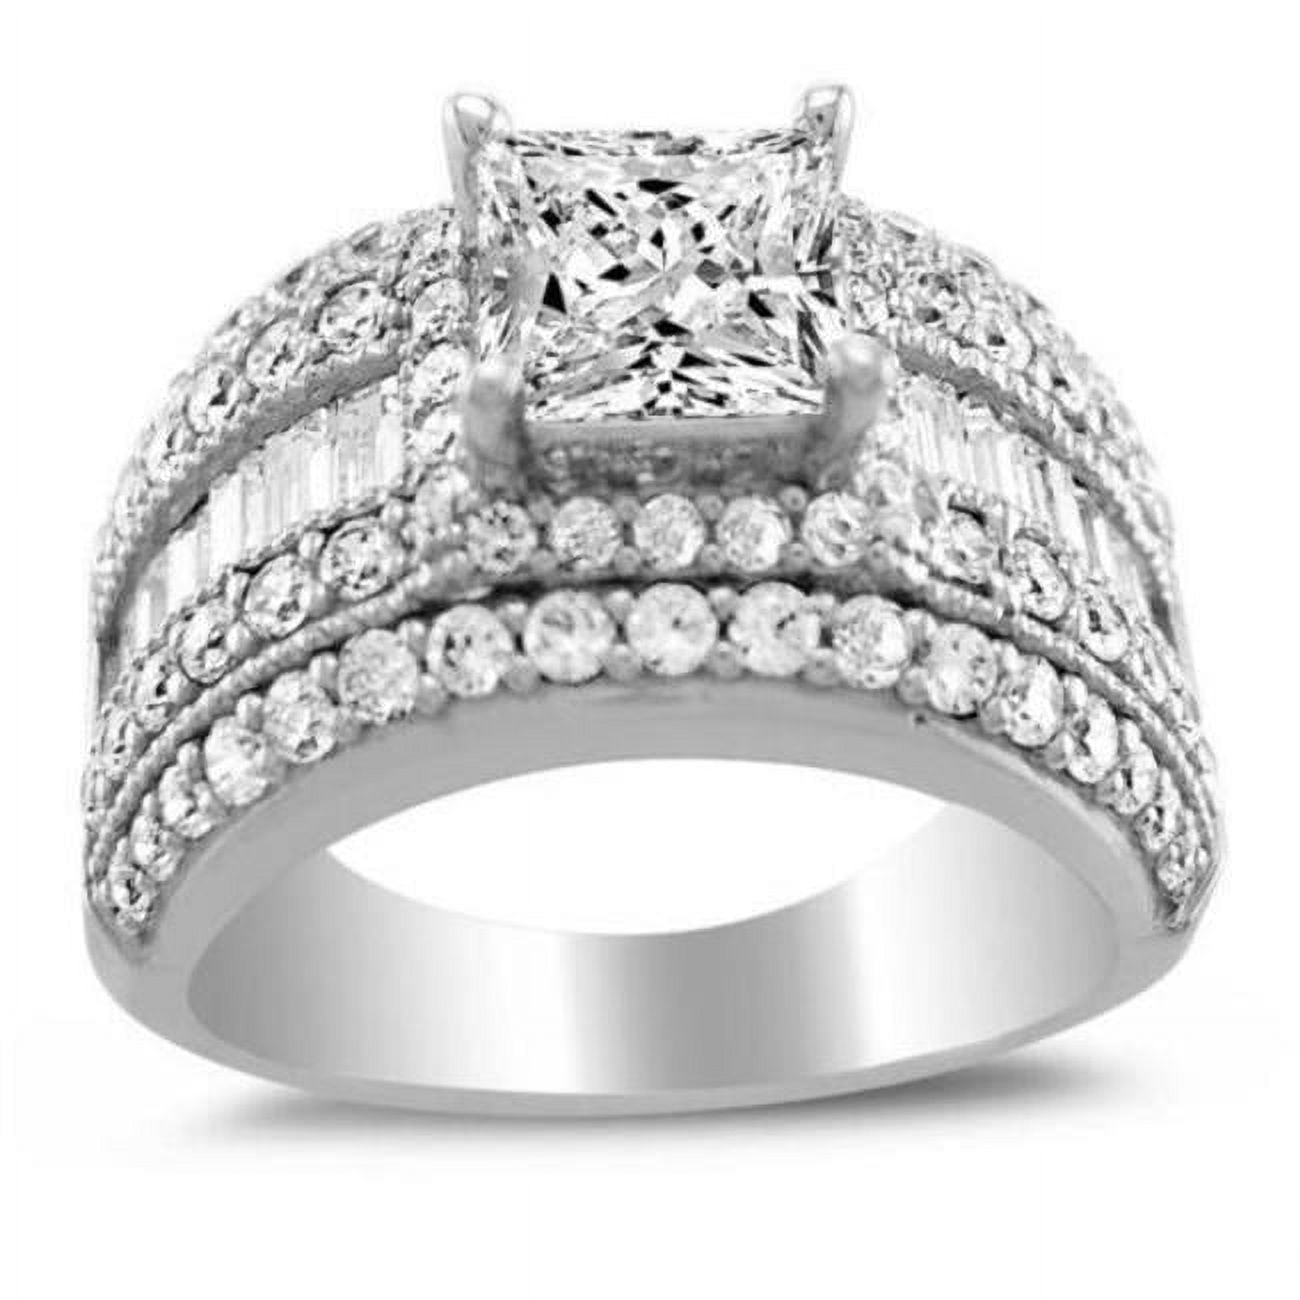 OS0065-RG-sz9 14K White Gold 2.5CT TGW Princess-cut Diamonette Engagement Ring, Size 9 -  Precious Stars, OS0065-RG_sz9